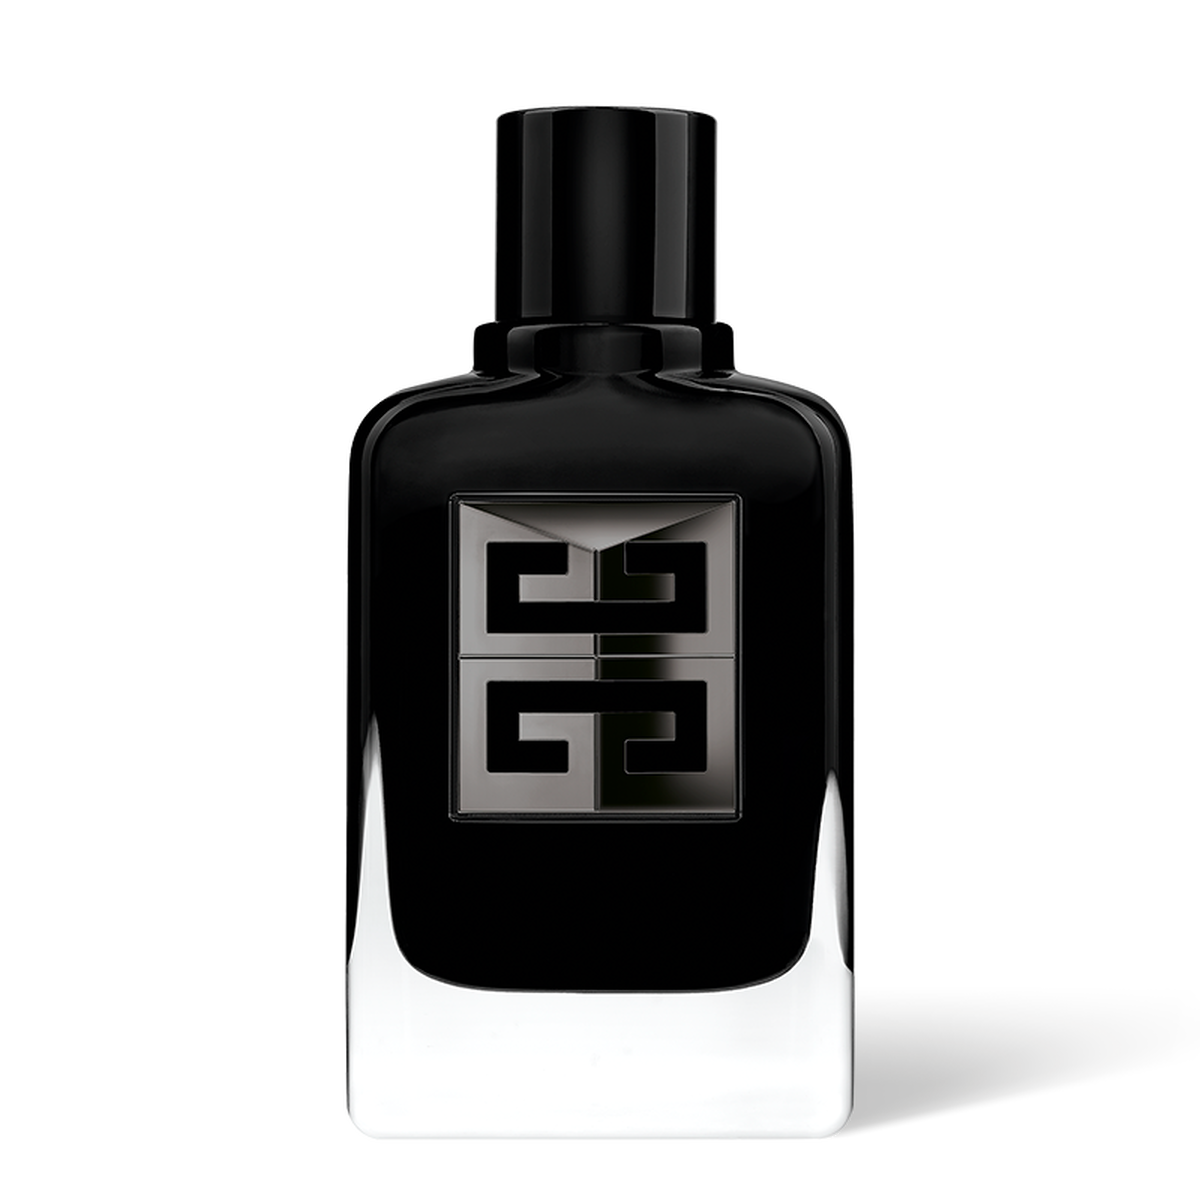 Nước Hoa GIVENCHY Gentleman Society Extreme Eau de Parfum #60 mL